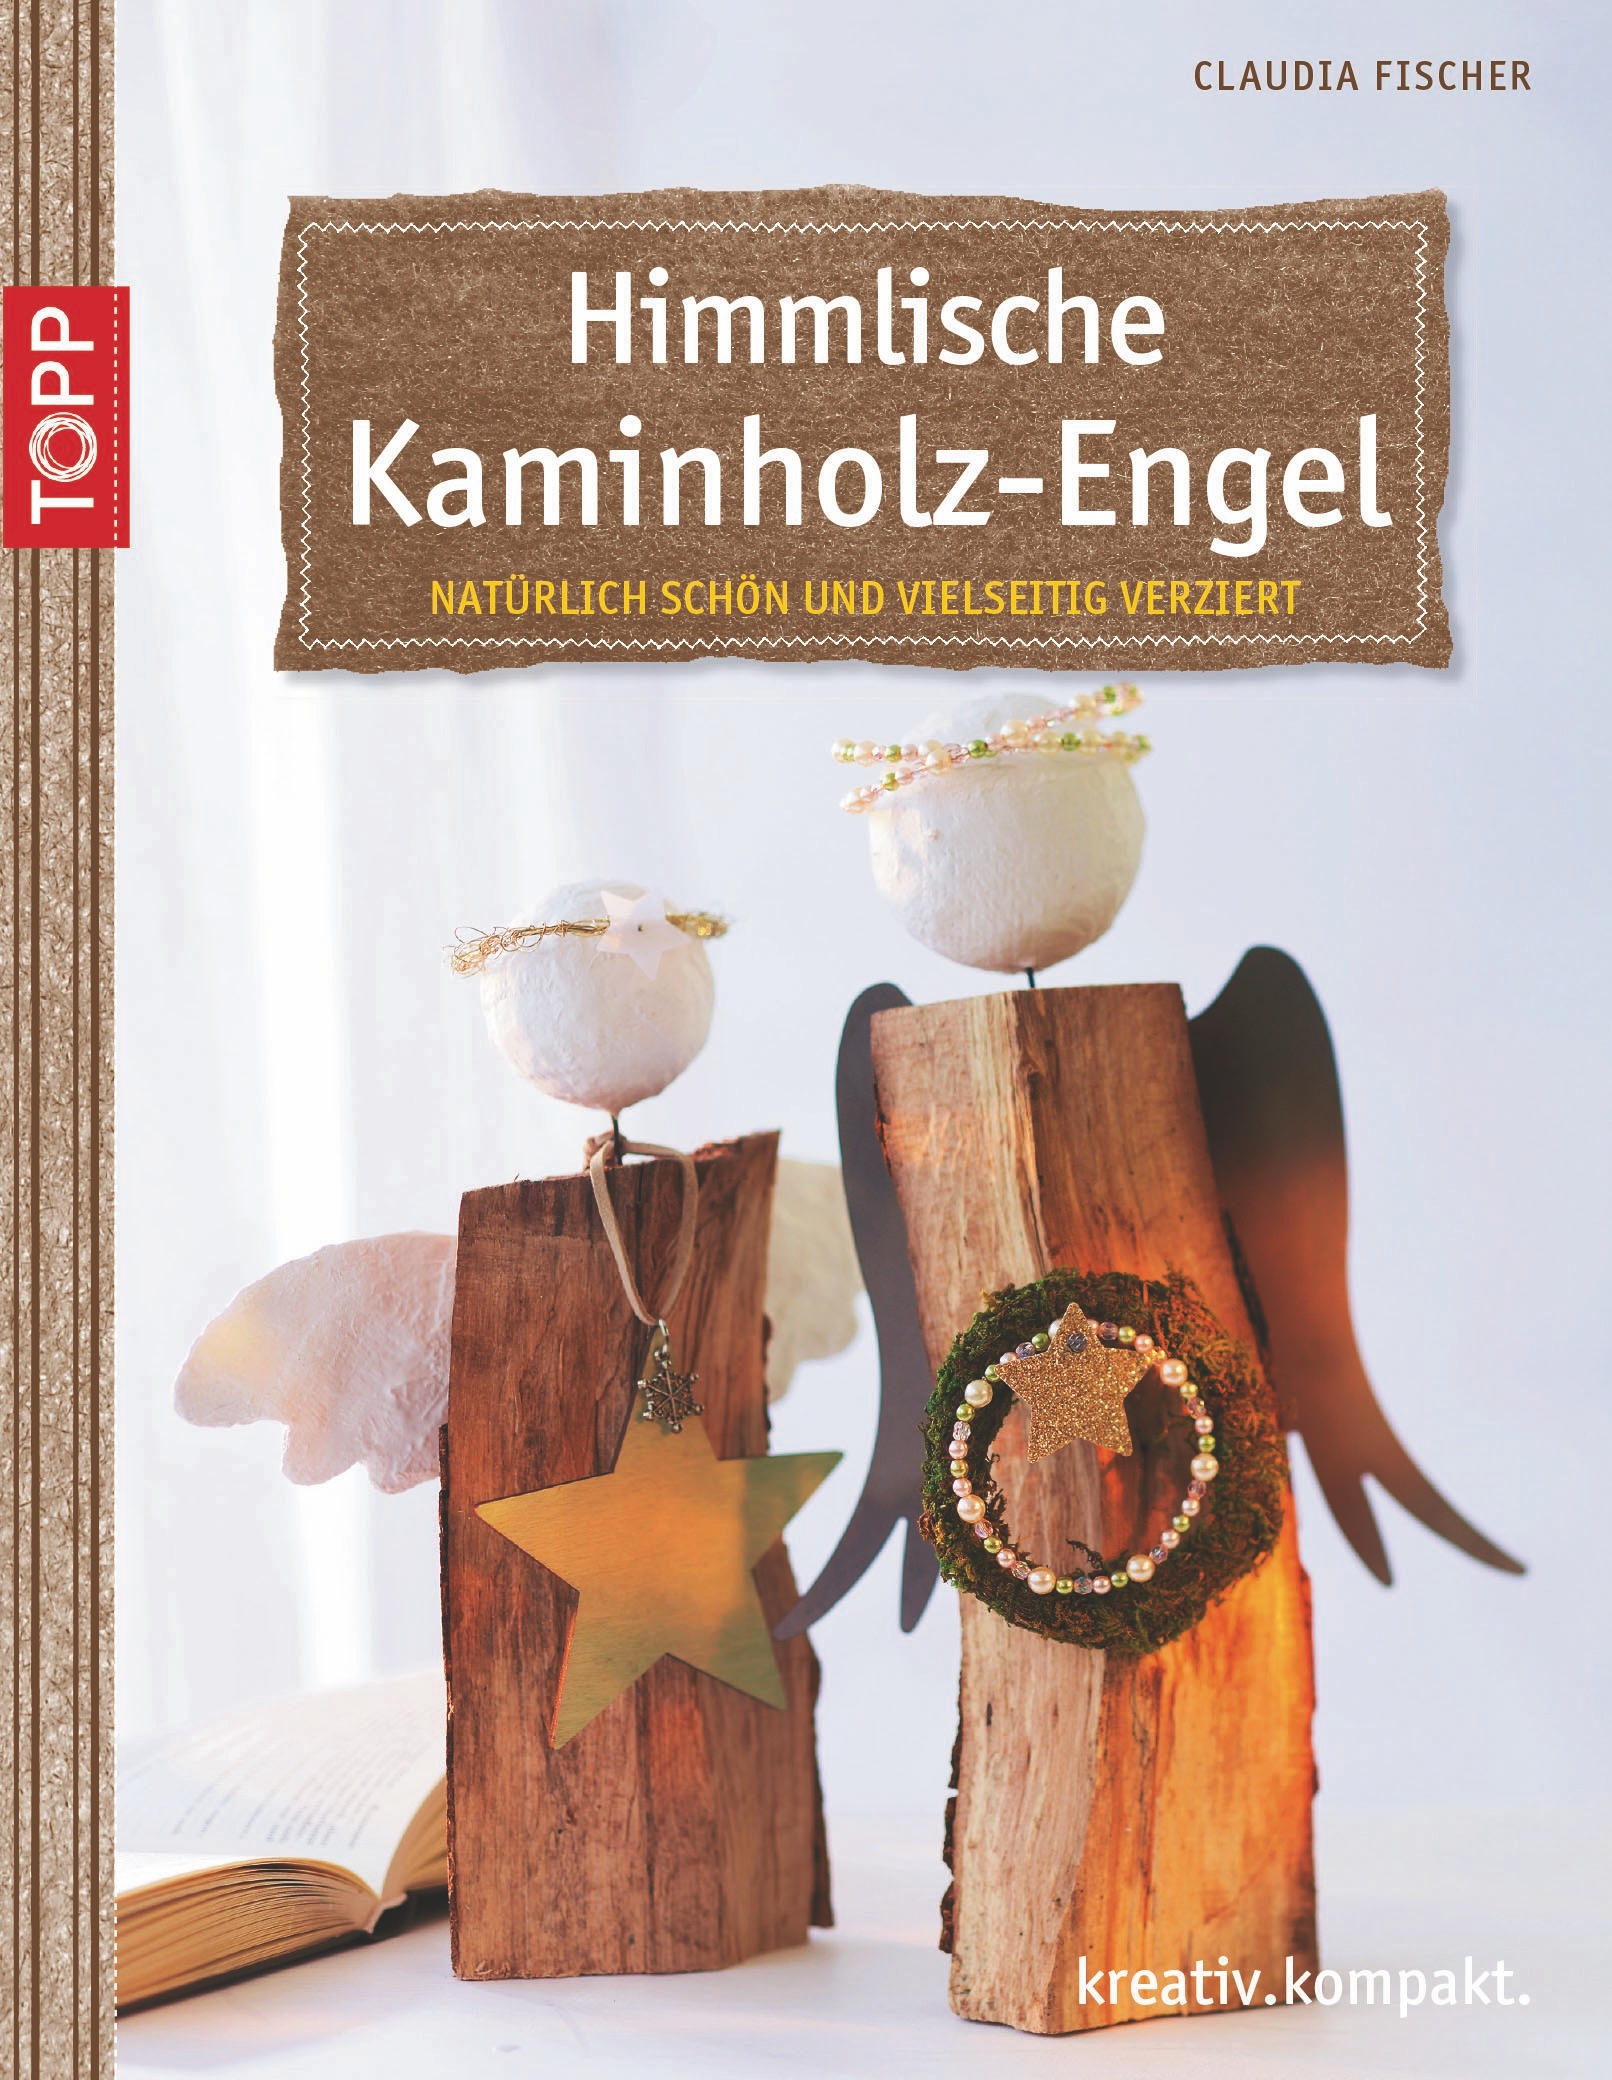 Himmlische Kaminholz-Engel